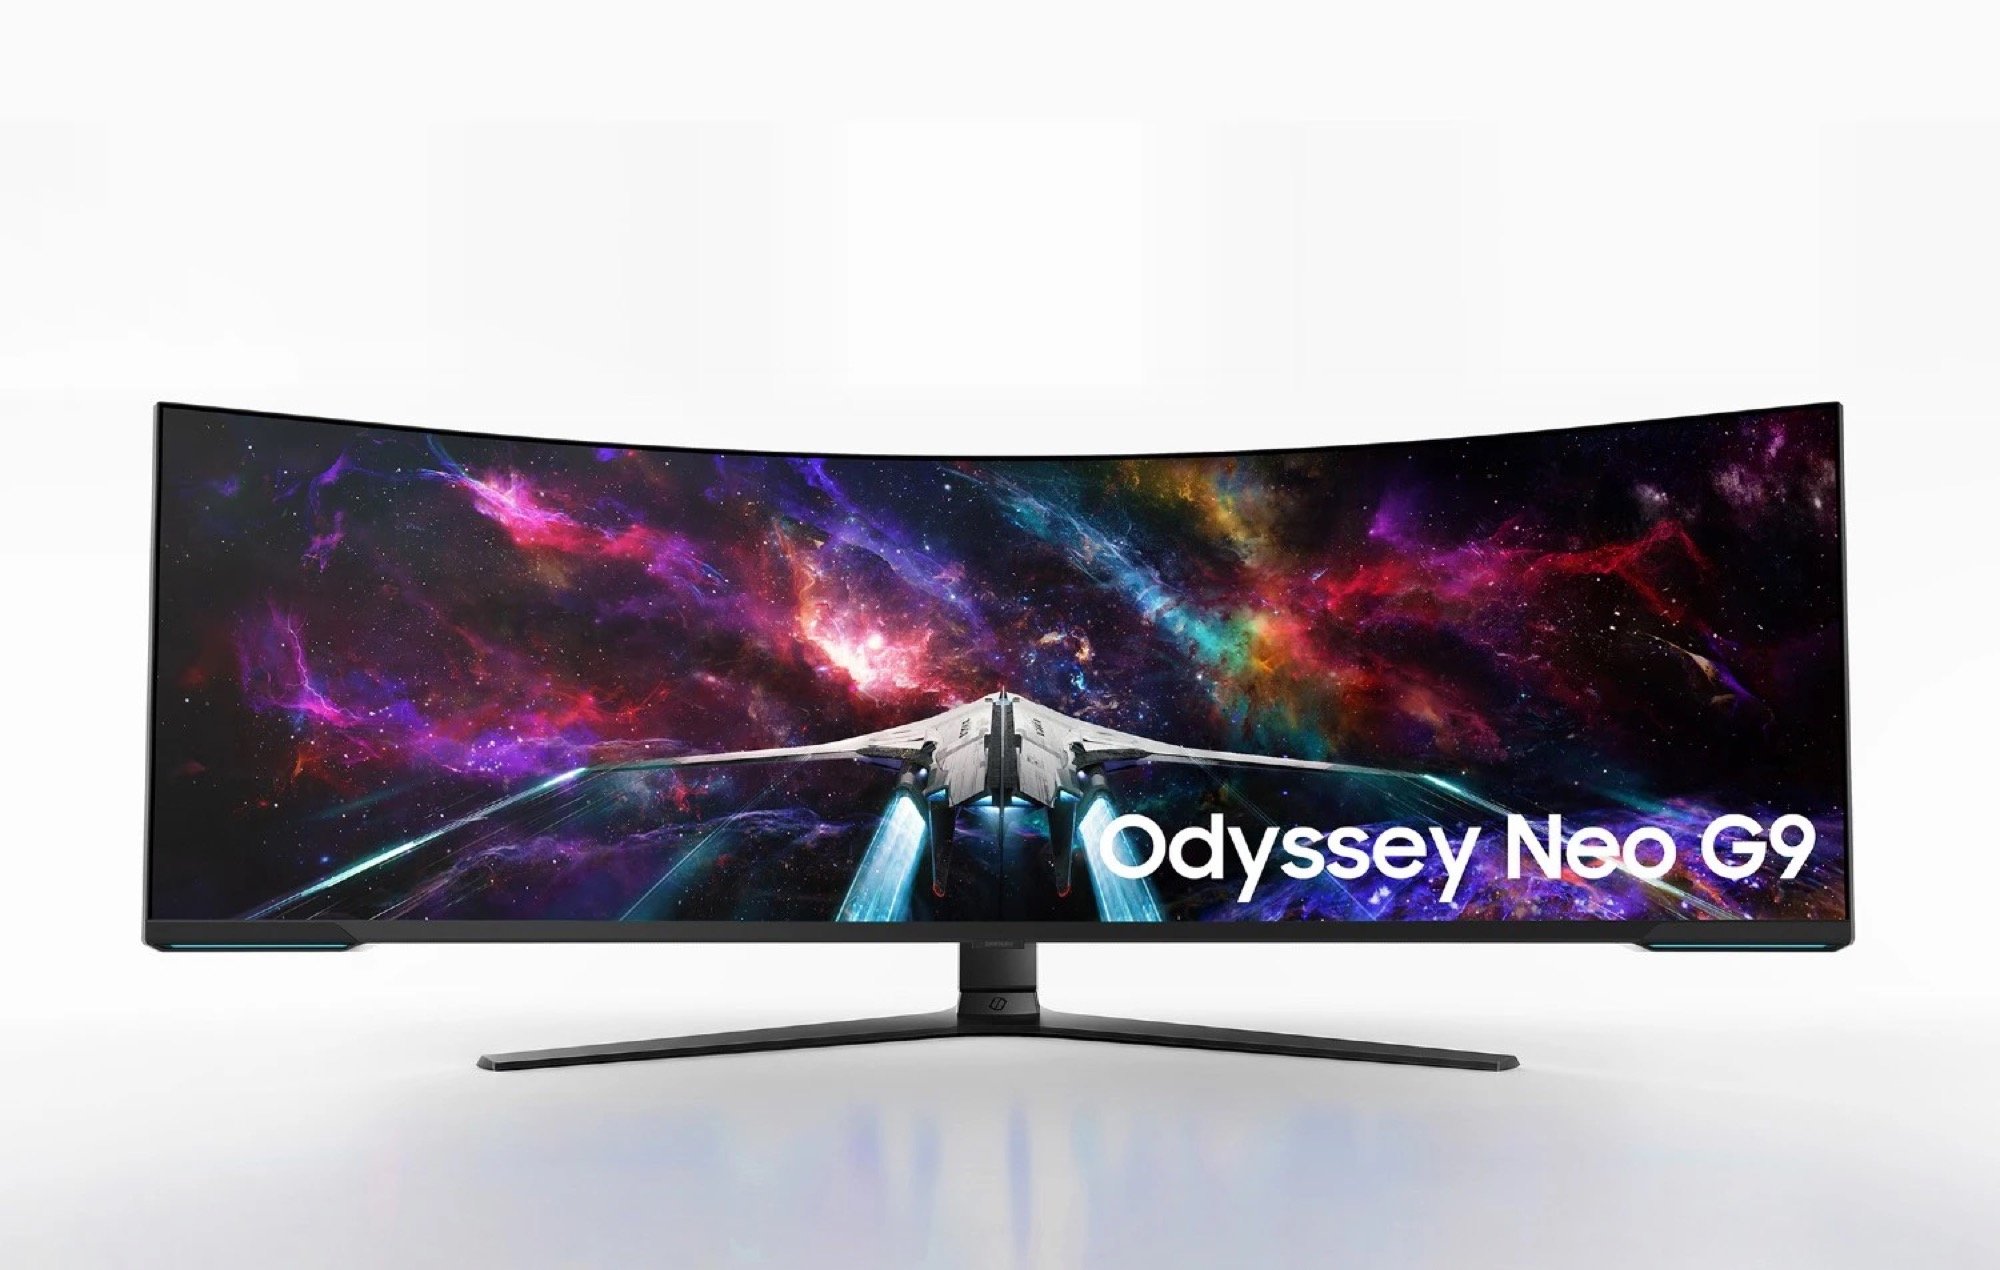 Samsung lance l'Odyssey Neo G8, le premier écran gamer 4K 240 Hz